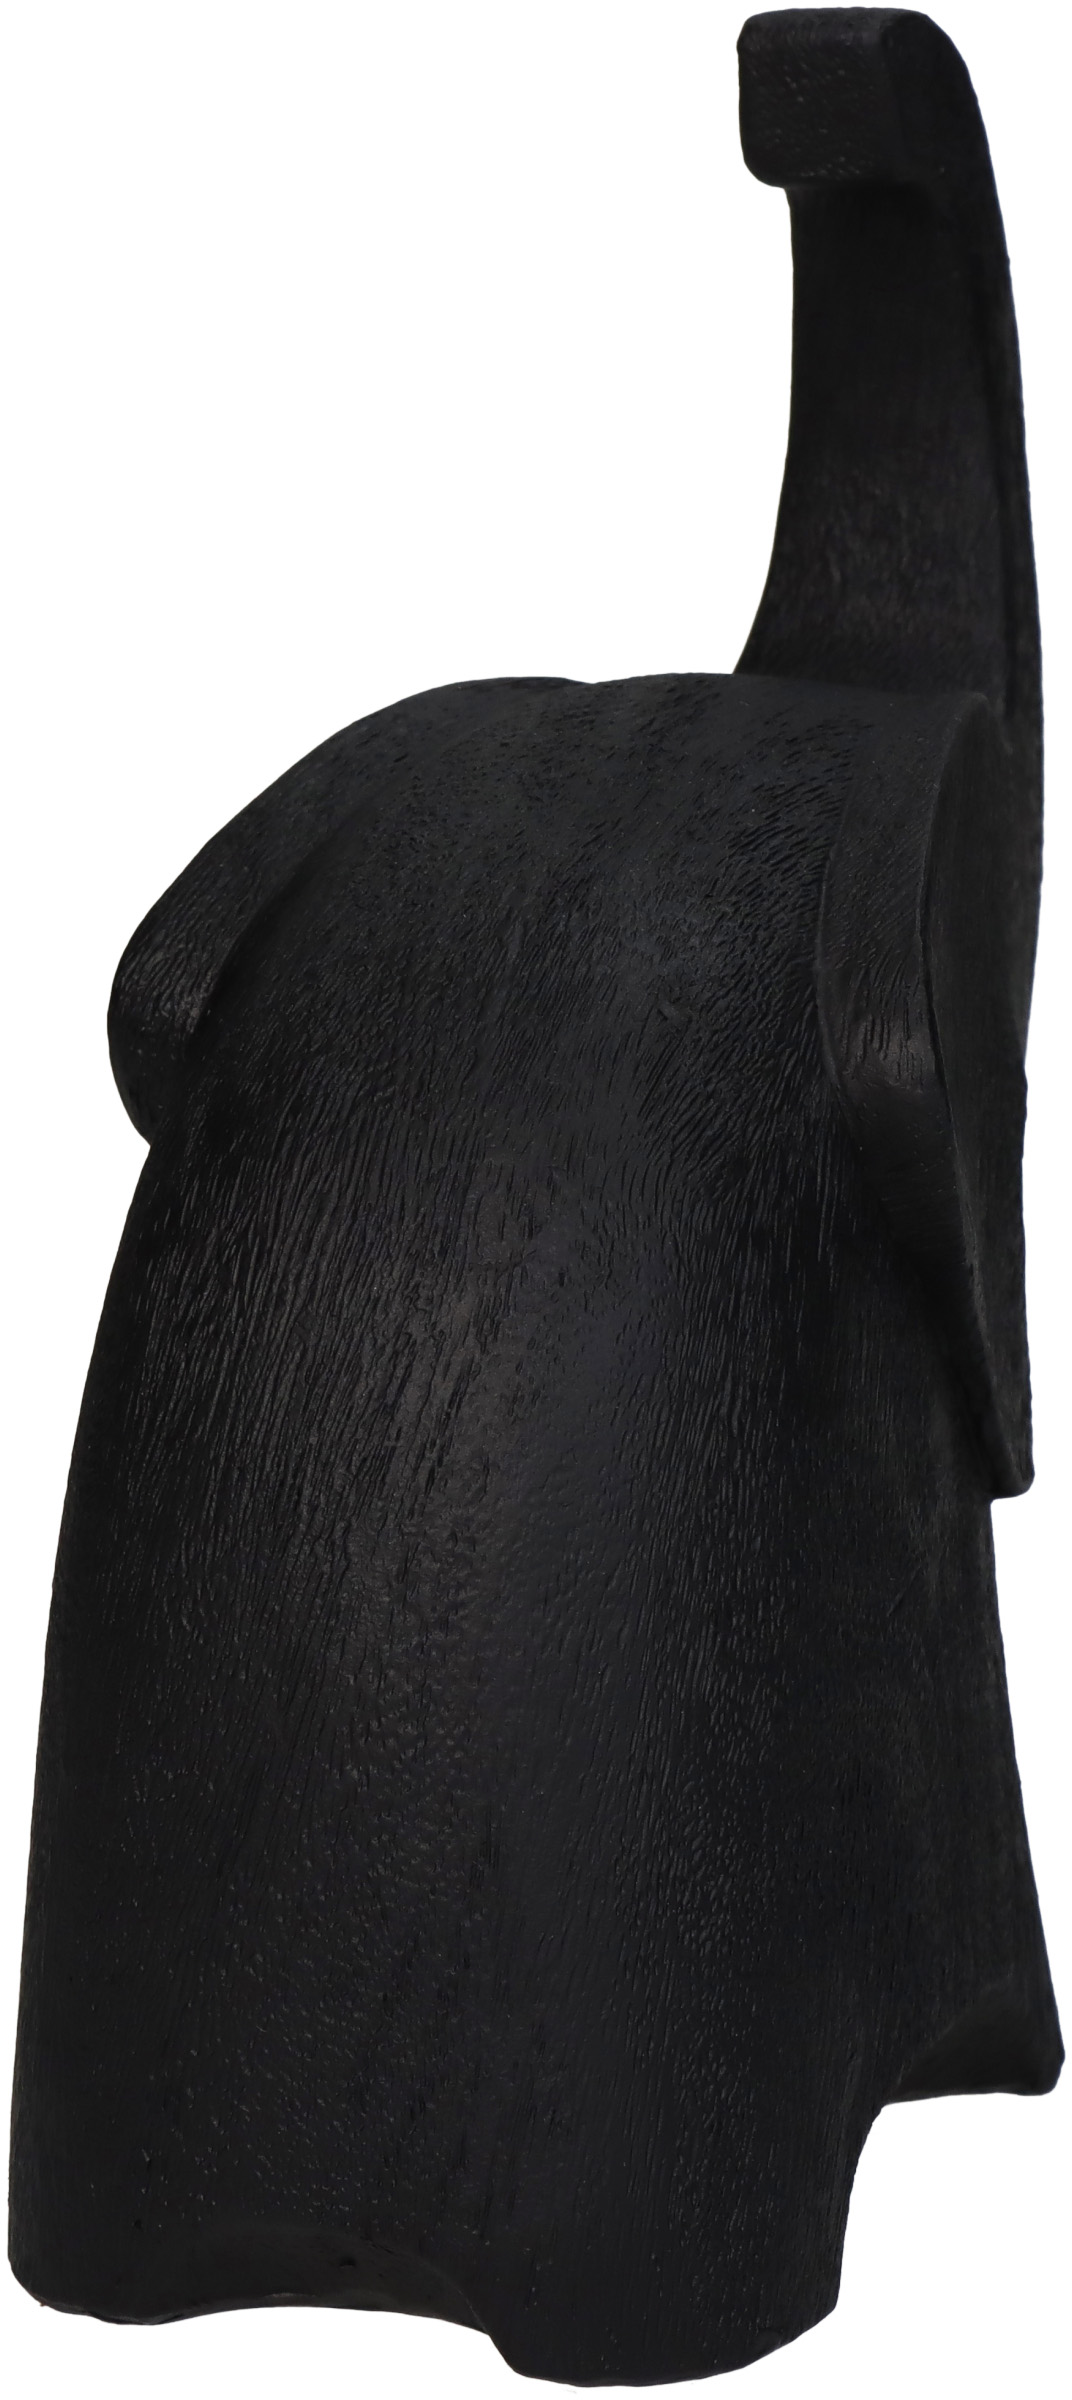 Ornament Elephant Black 13x7x15cm